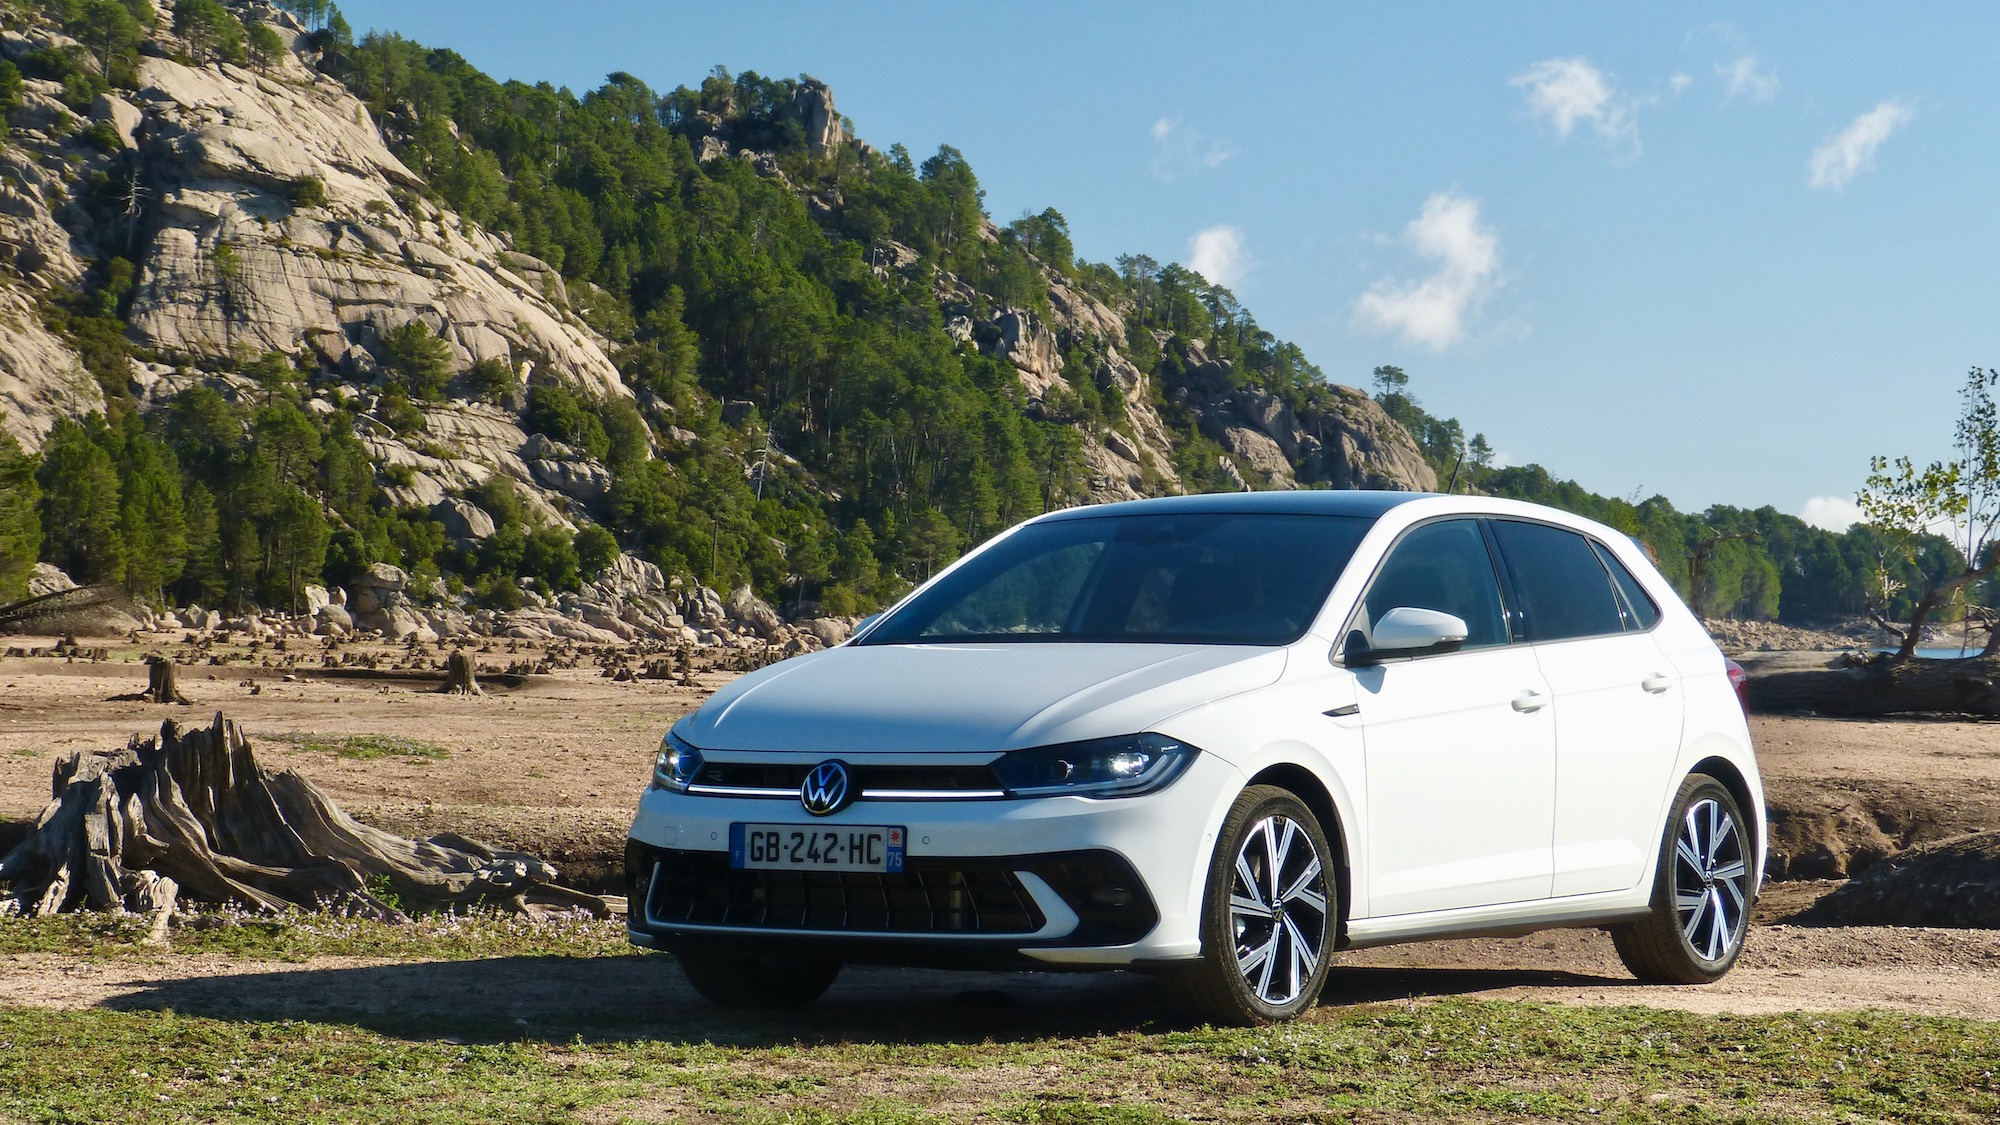 Essai Volkswagen Polo VI Facelift : mais que reste-t'il à la Golf ?, polo 6  